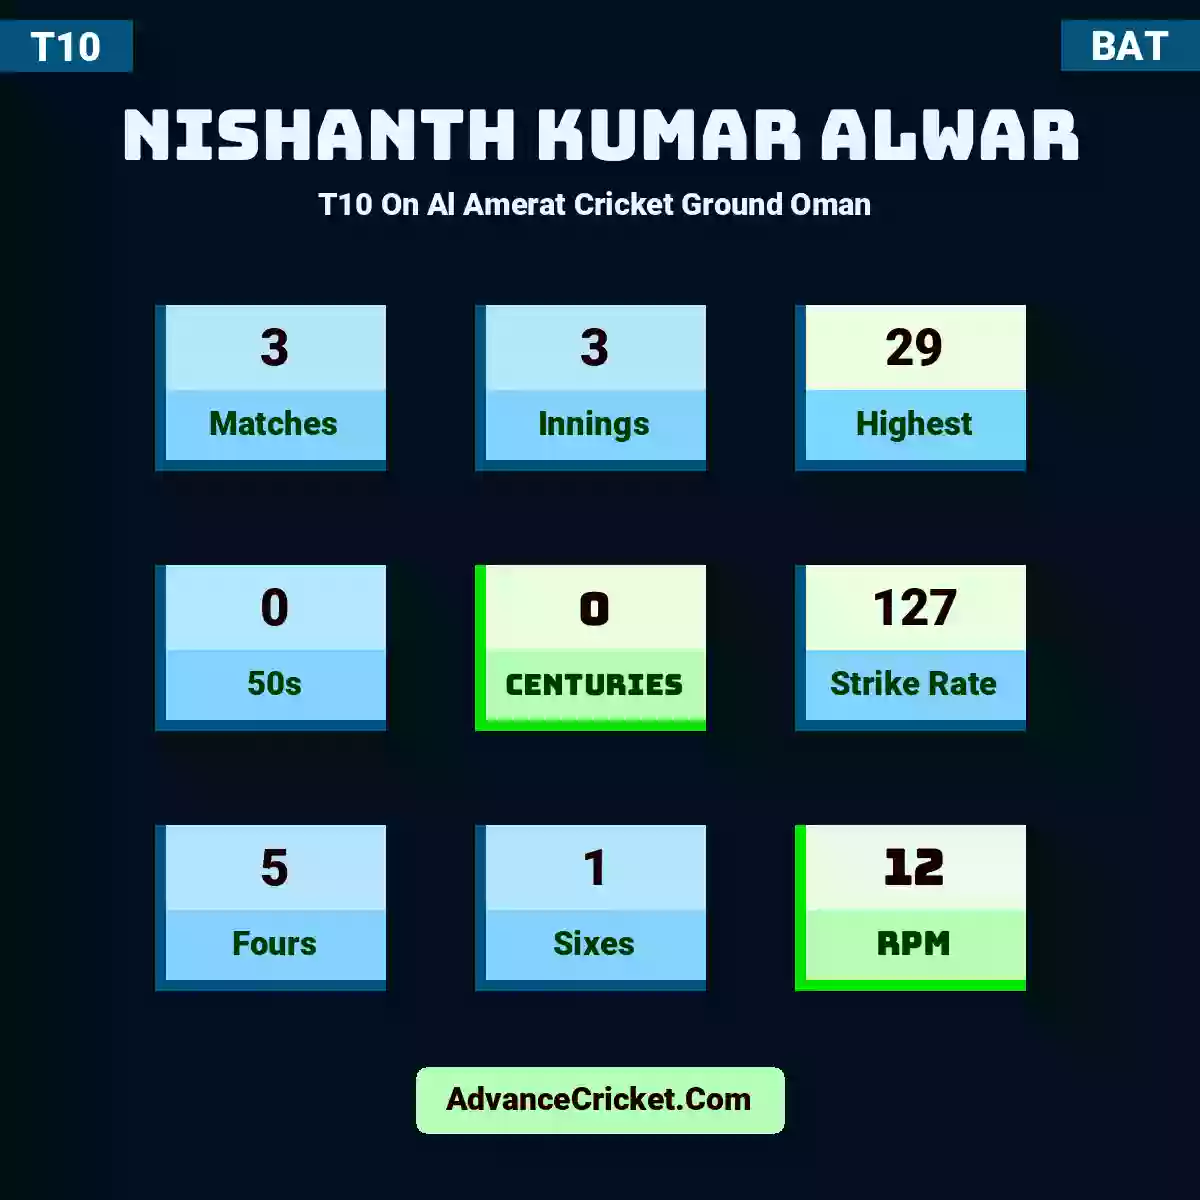 Nishanth Kumar Alwar T10  On Al Amerat Cricket Ground Oman , Nishanth Kumar Alwar played 3 matches, scored 29 runs as highest, 0 half-centuries, and 0 centuries, with a strike rate of 127. N.Kumar.Alwar hit 5 fours and 1 sixes, with an RPM of 12.